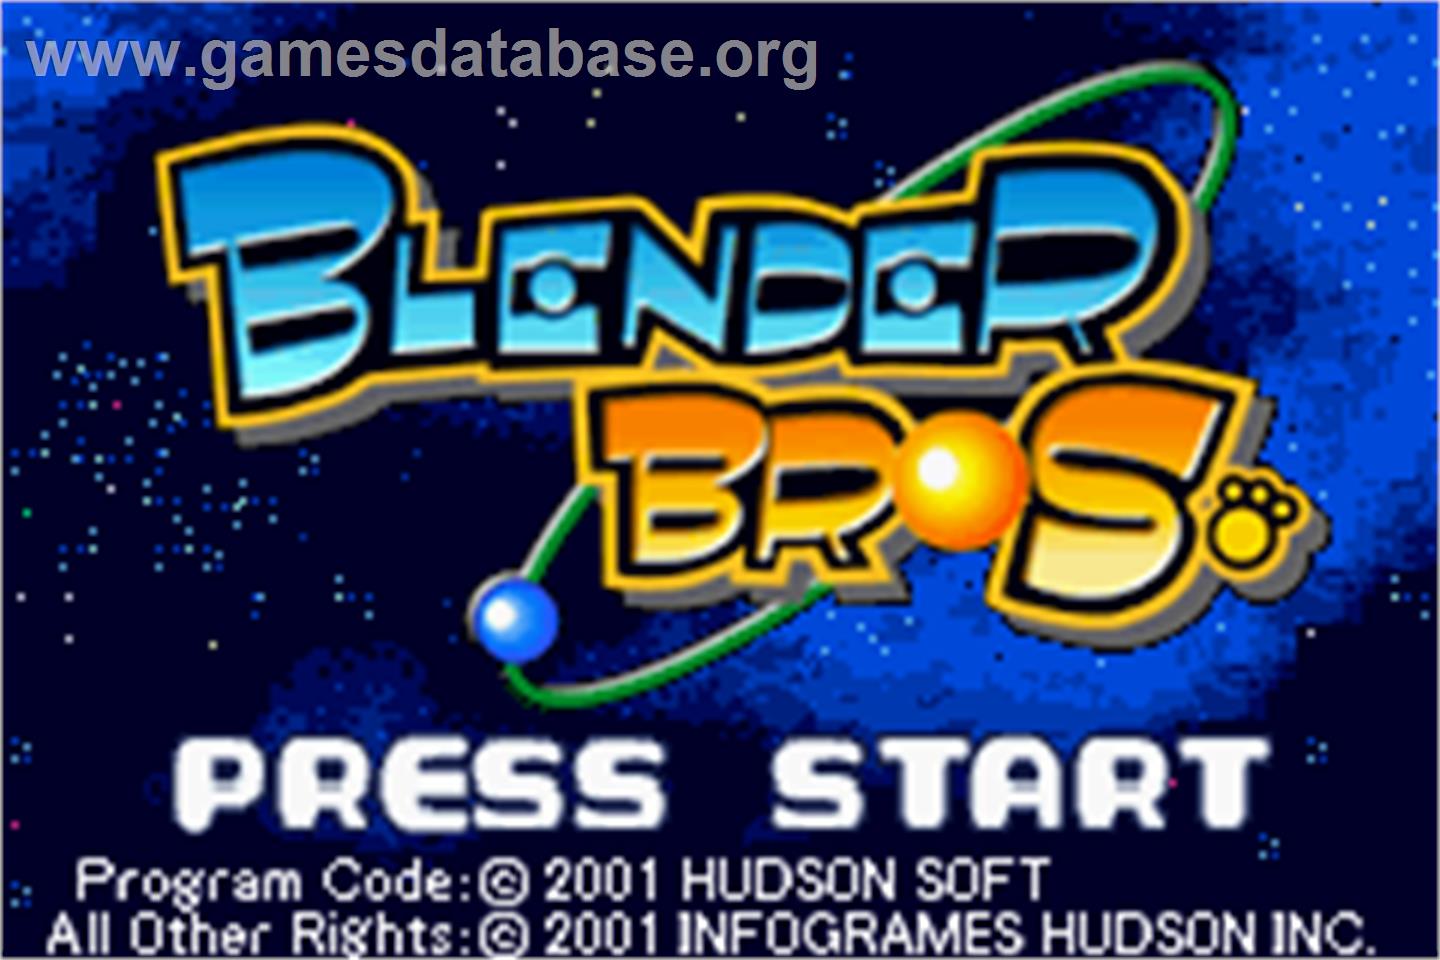 Blender Bros. - Nintendo Game Boy Advance - Artwork - Title Screen